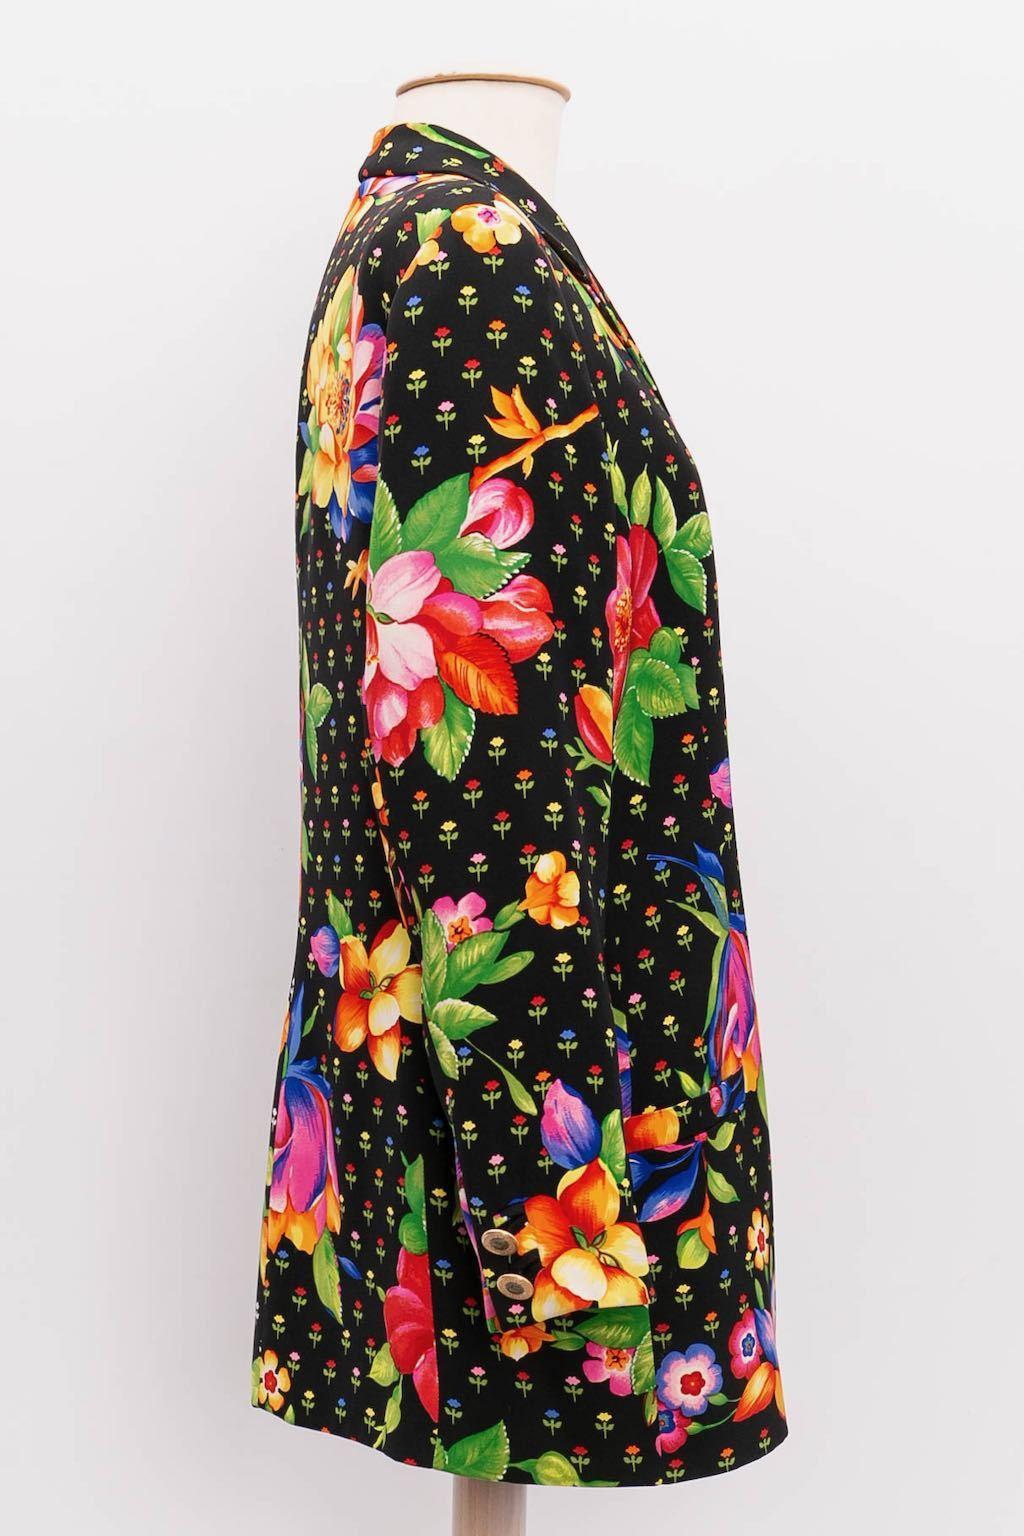 Gianni Versace Couture Silk Jacket In Excellent Condition For Sale In SAINT-OUEN-SUR-SEINE, FR